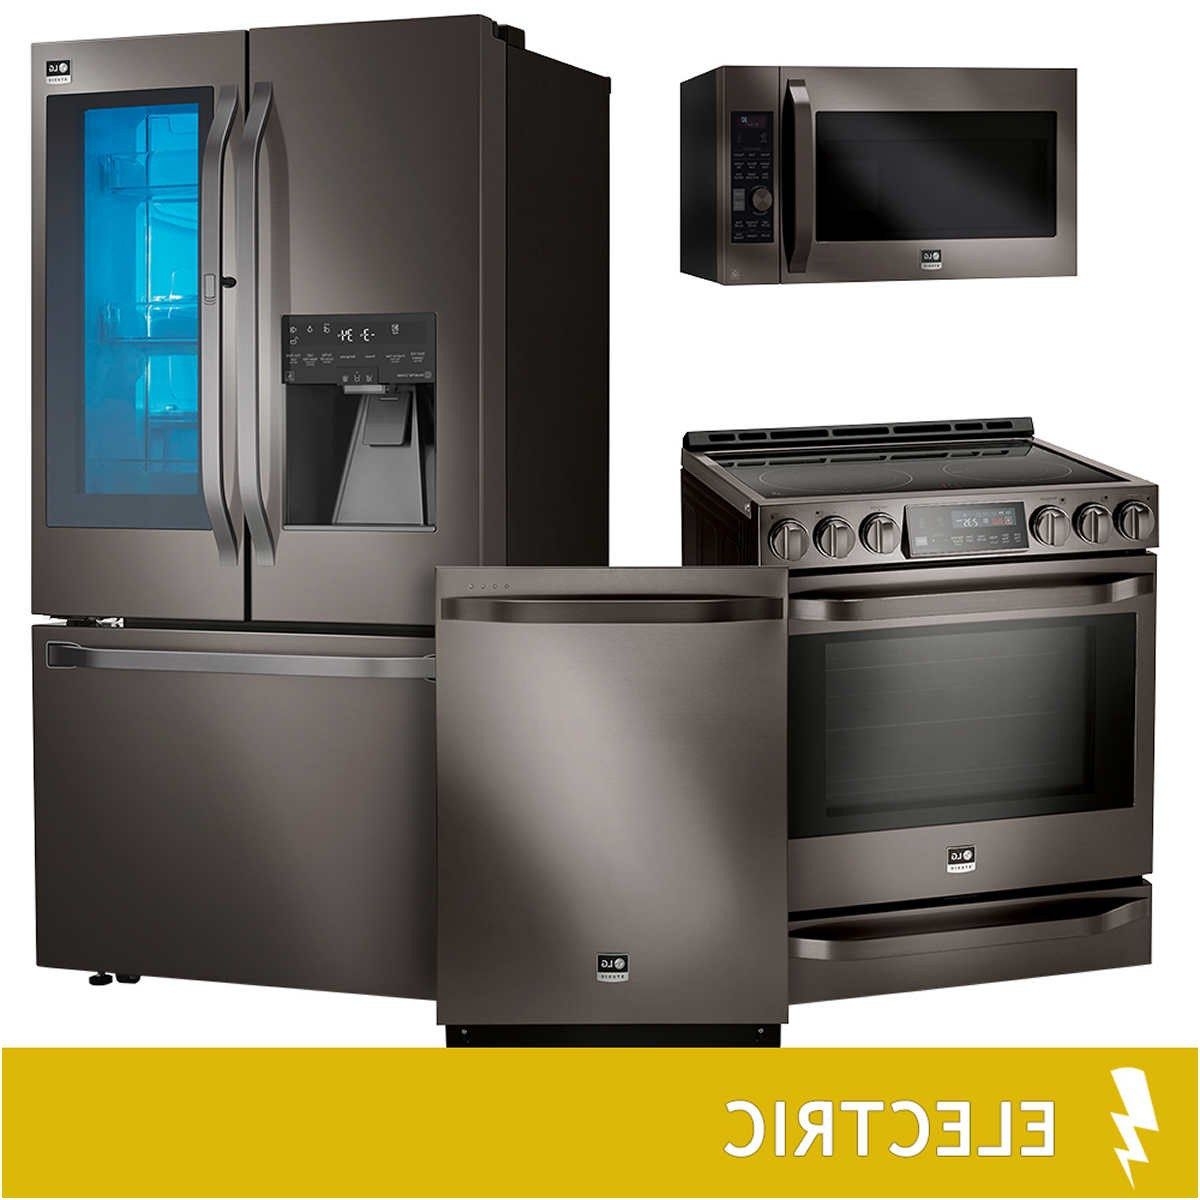 7 Images Brandsmart Kitchen Appliance Packages And Review Alqu Blog